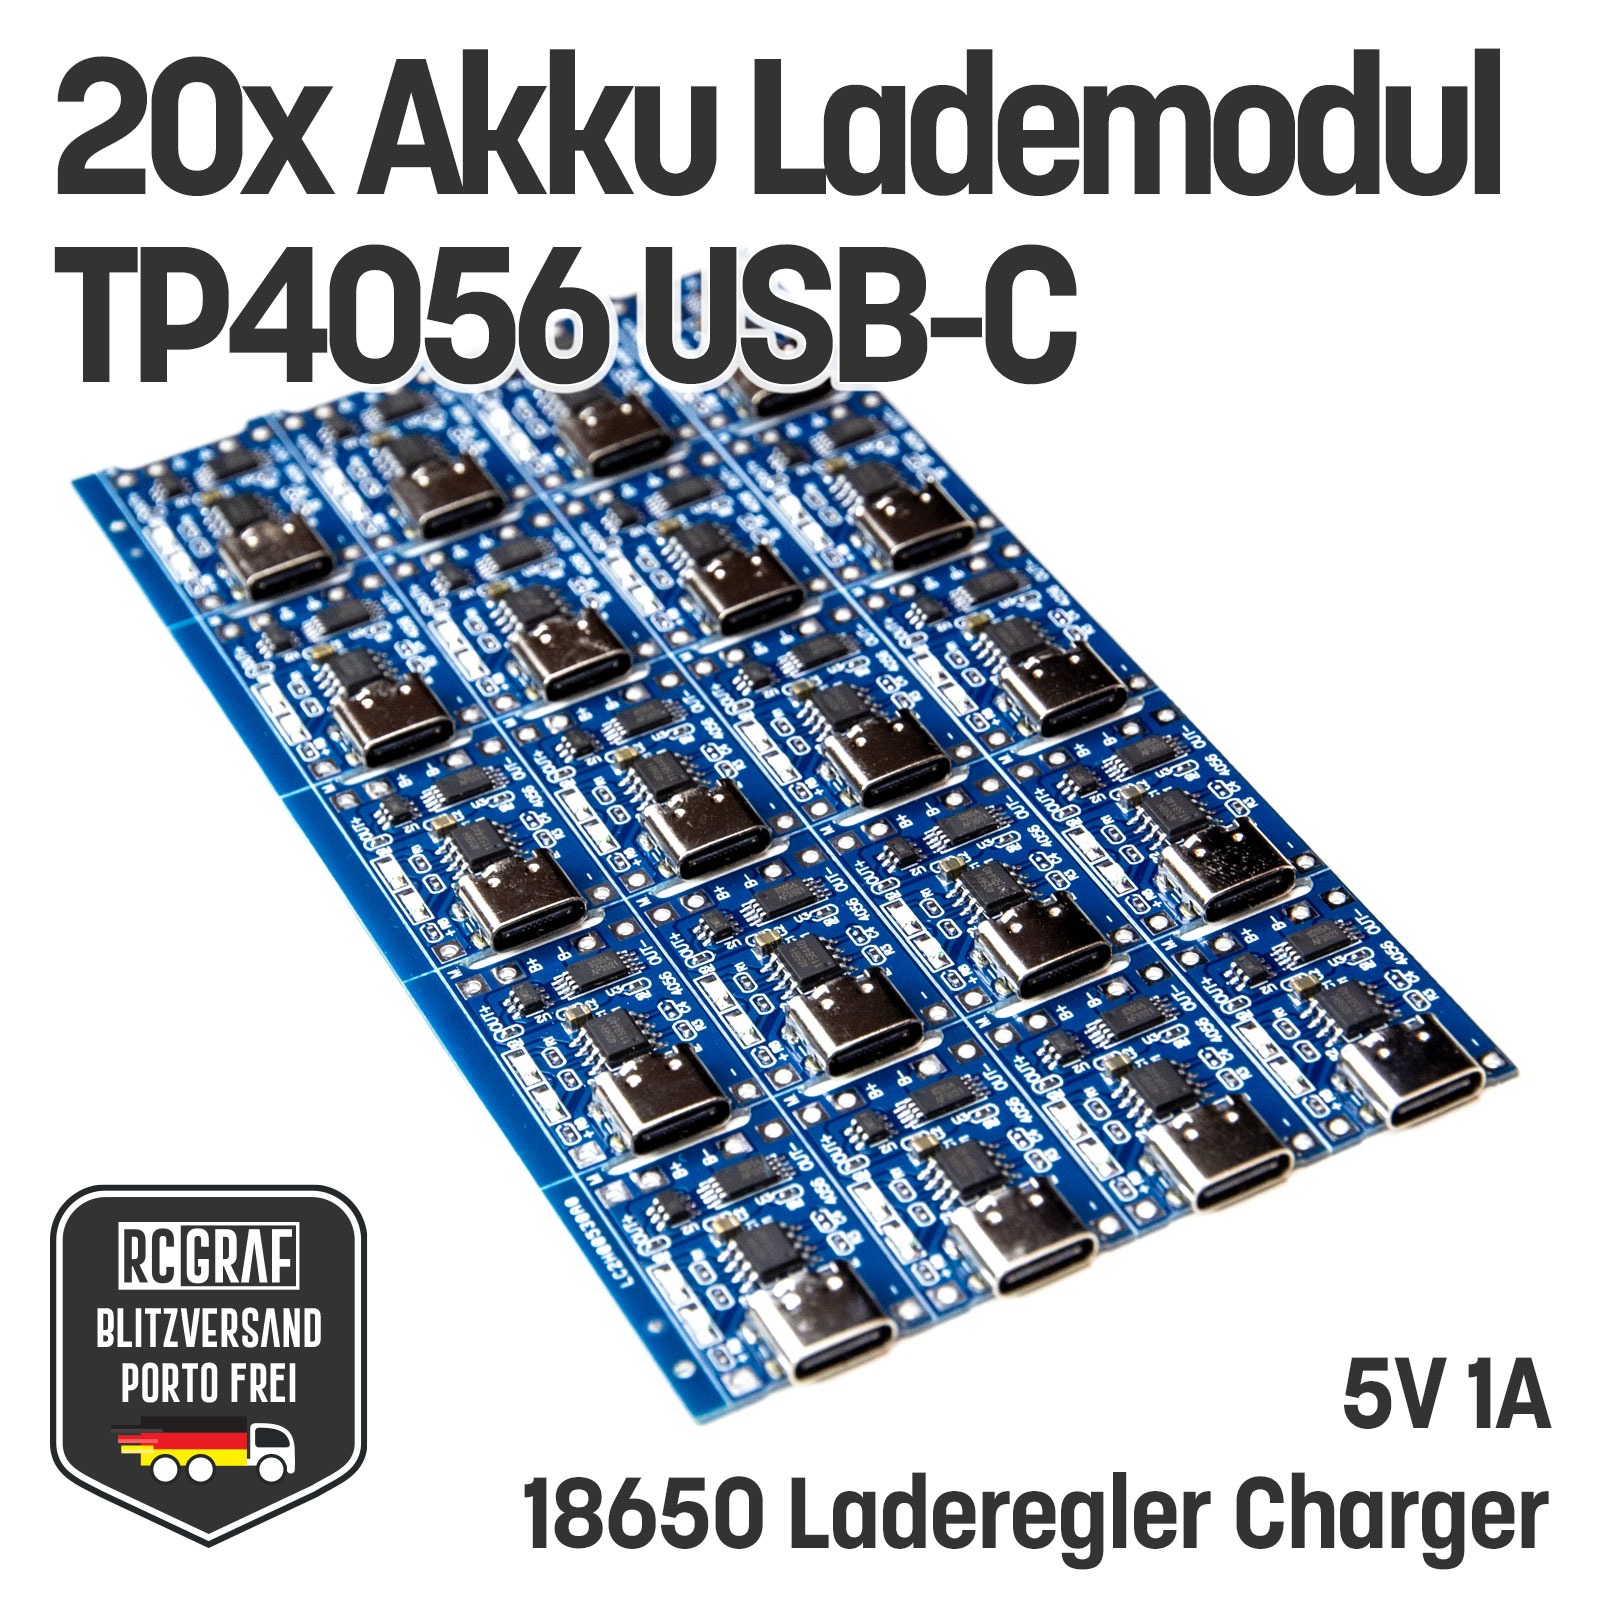 20x Akku Lademodul 5V 1A TP4056 USB C